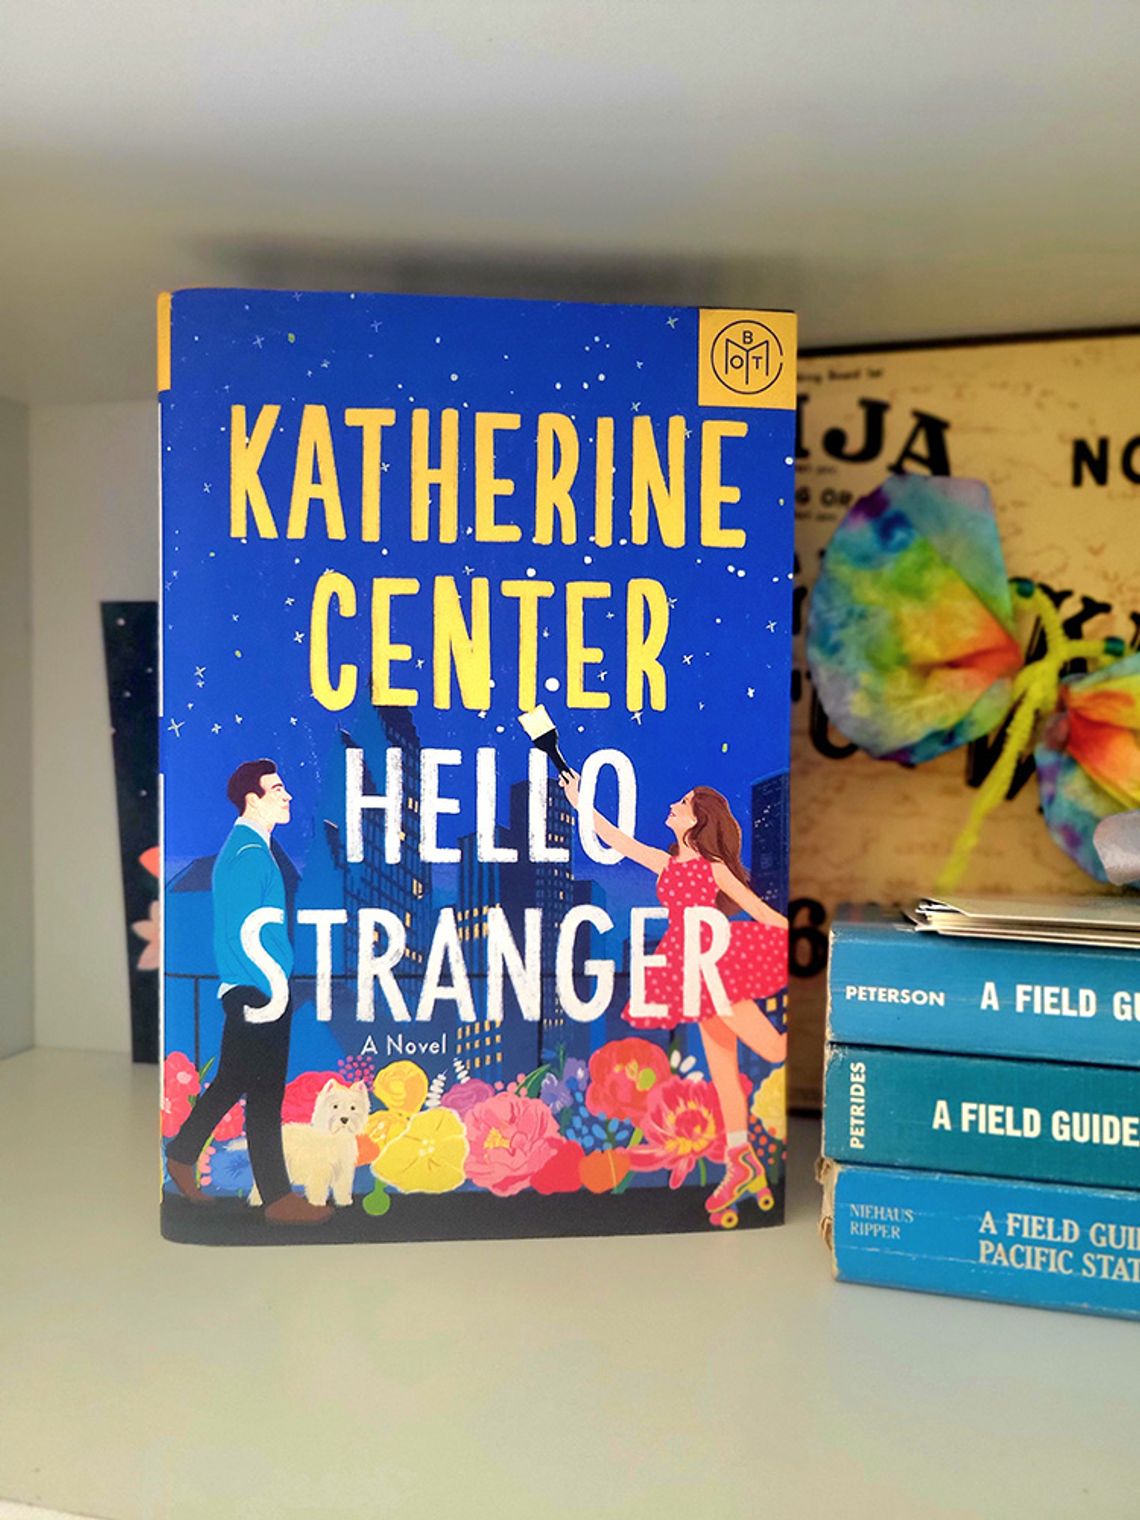 Allison’s Book Report - “Hello Stranger” by Katherine Center